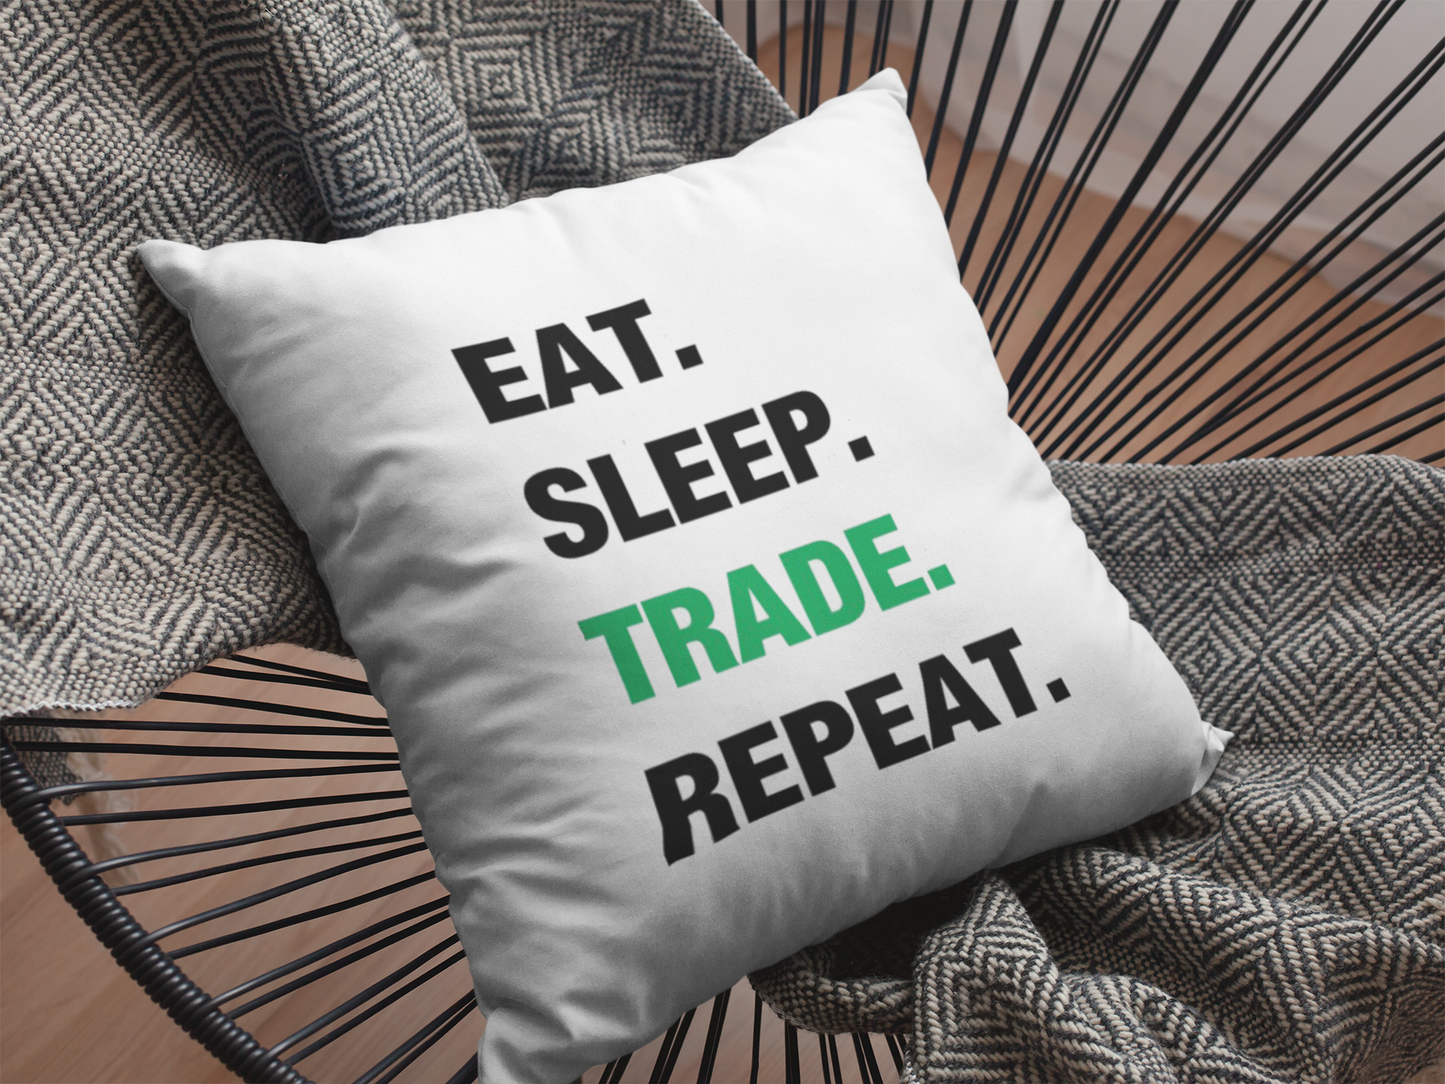 Eat Sleep Trade Repeat Printed Cushion